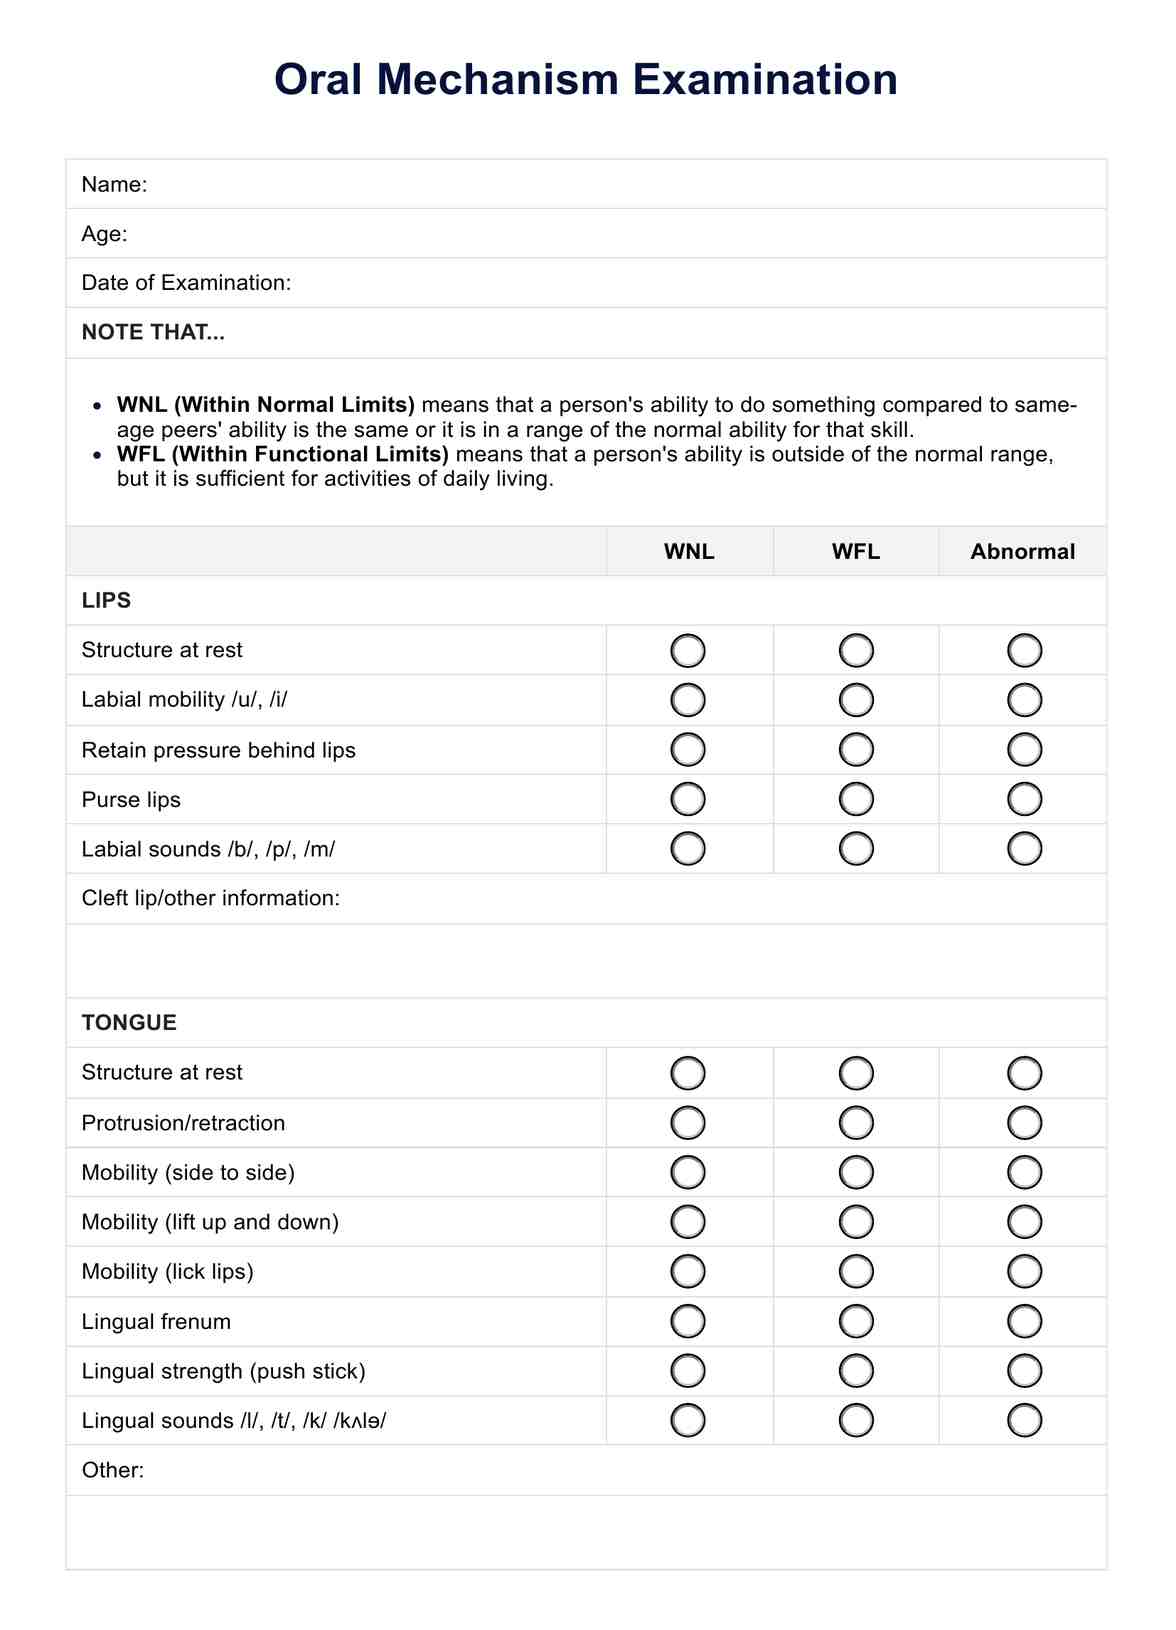 Oral Mechanism Examination PDF Example